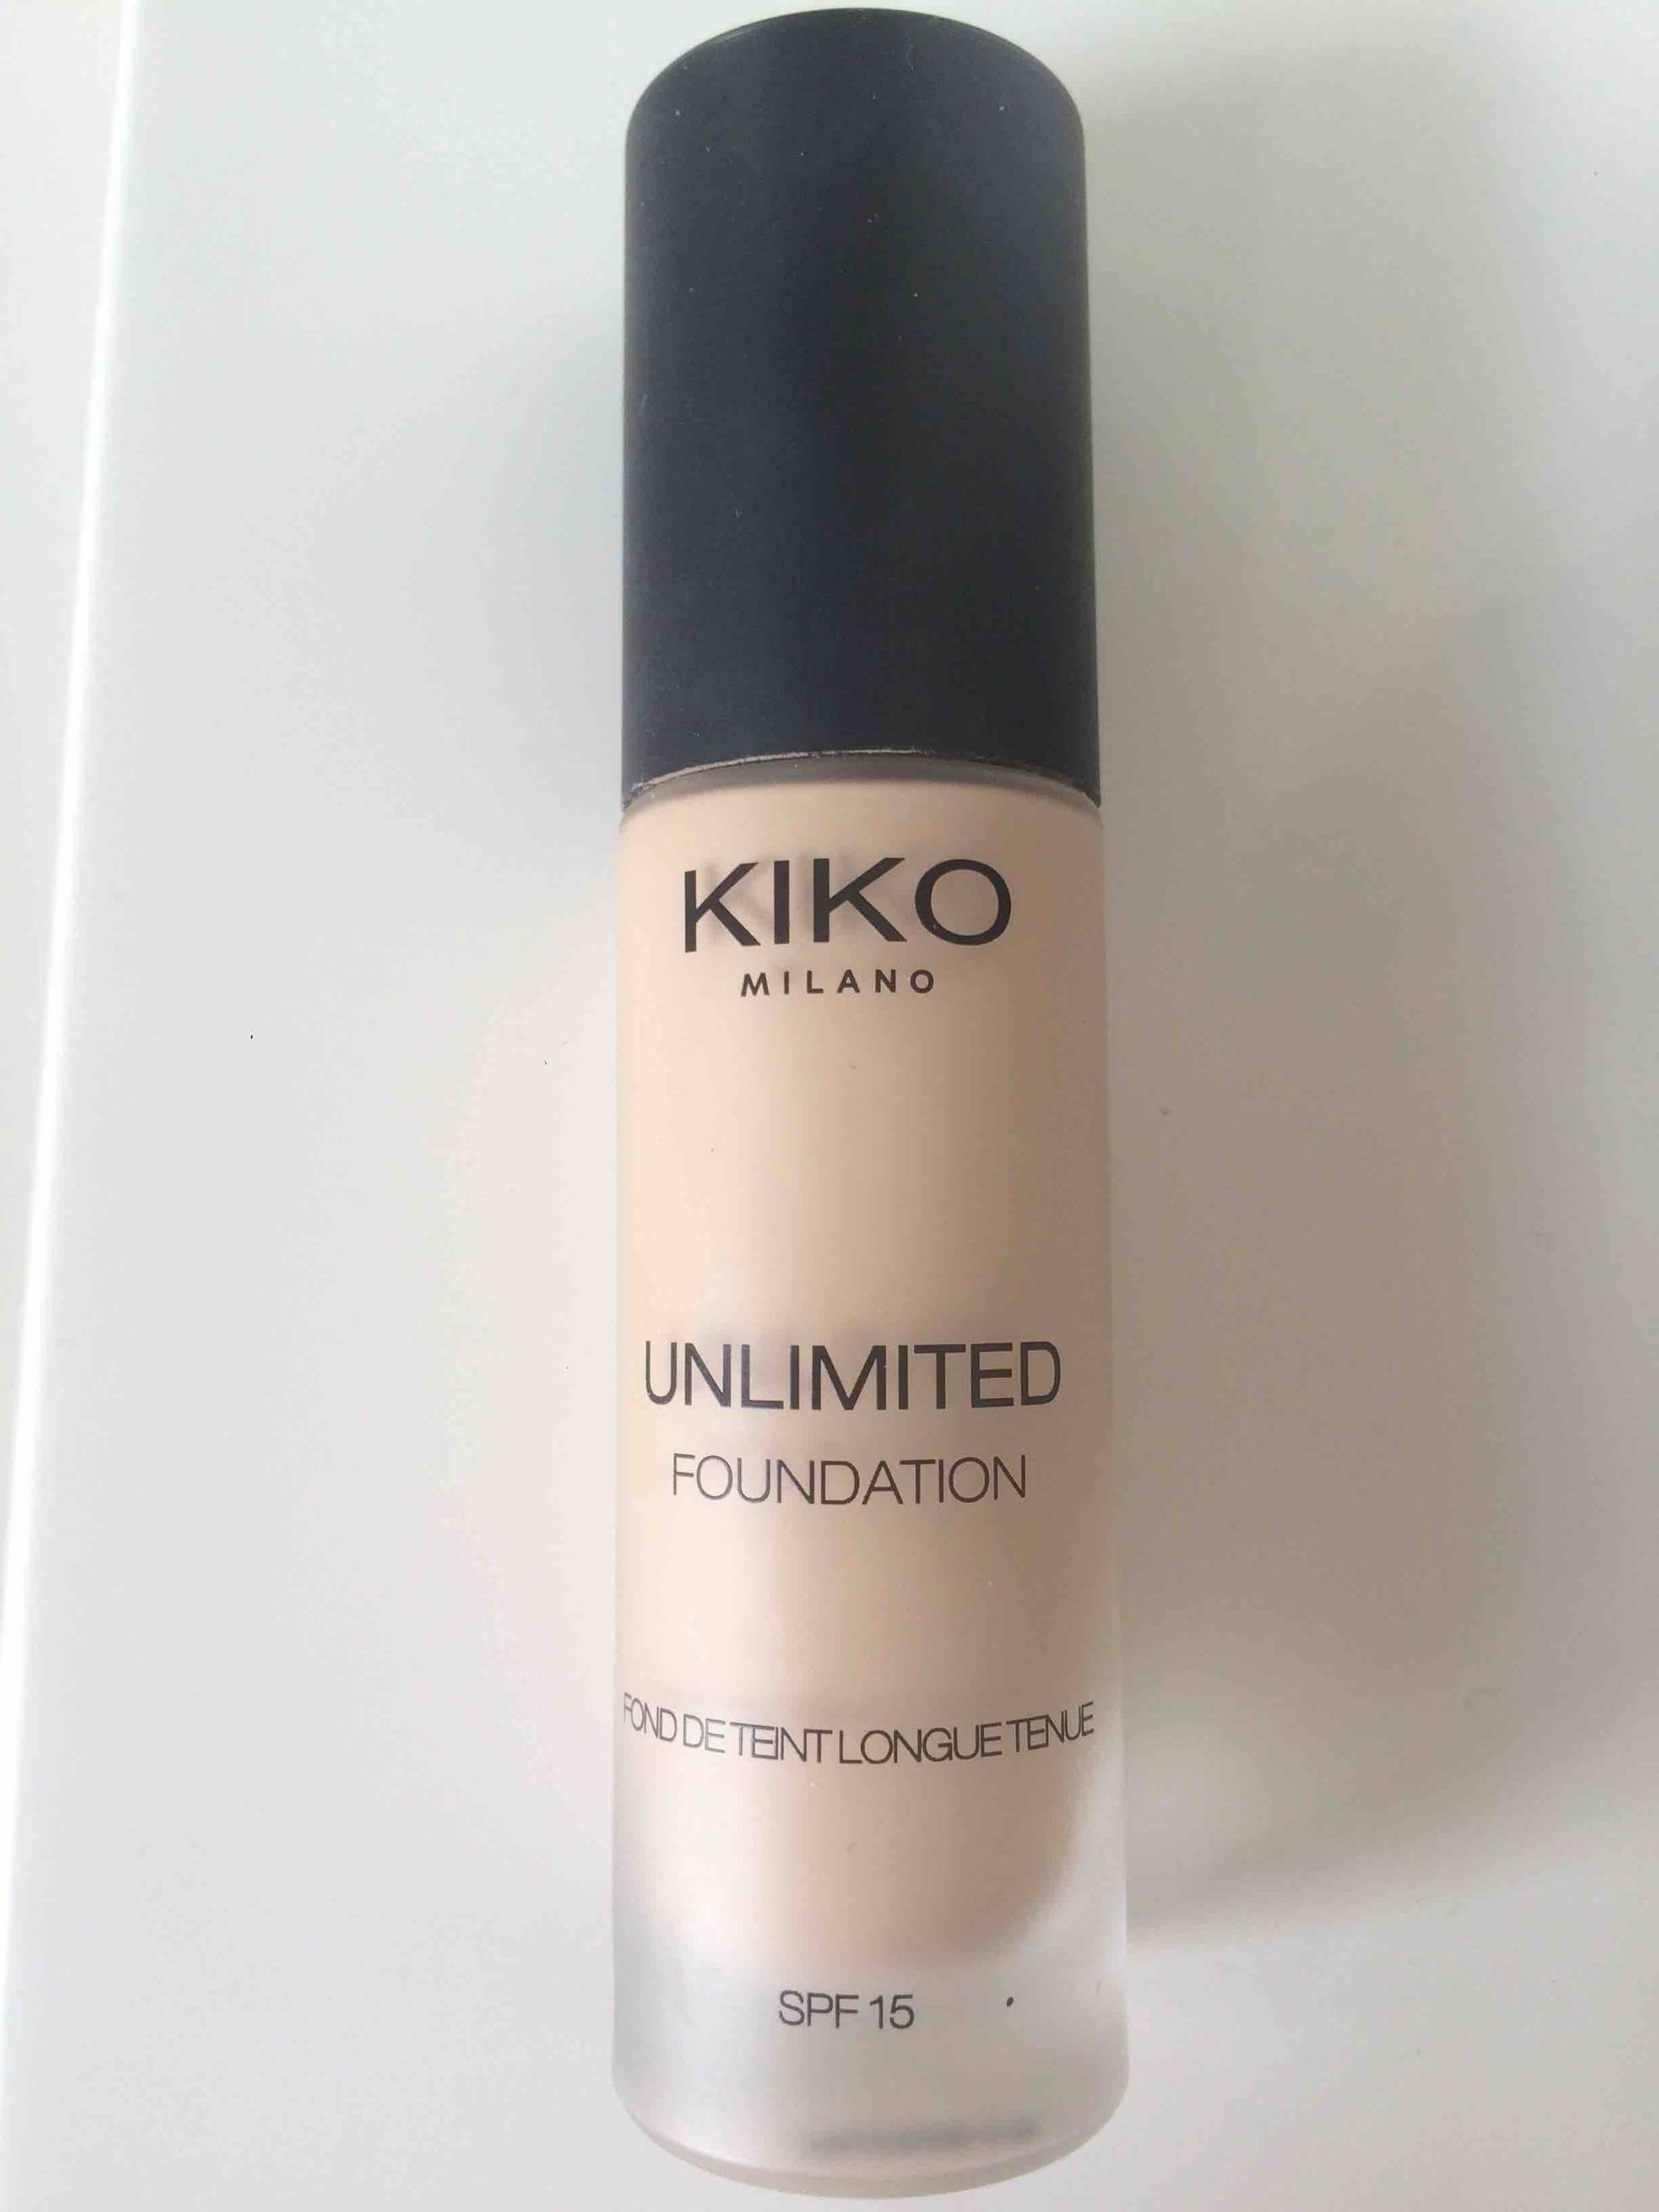 KIKO - Unlimited foundation - Fond de teint longue tenue SPF15